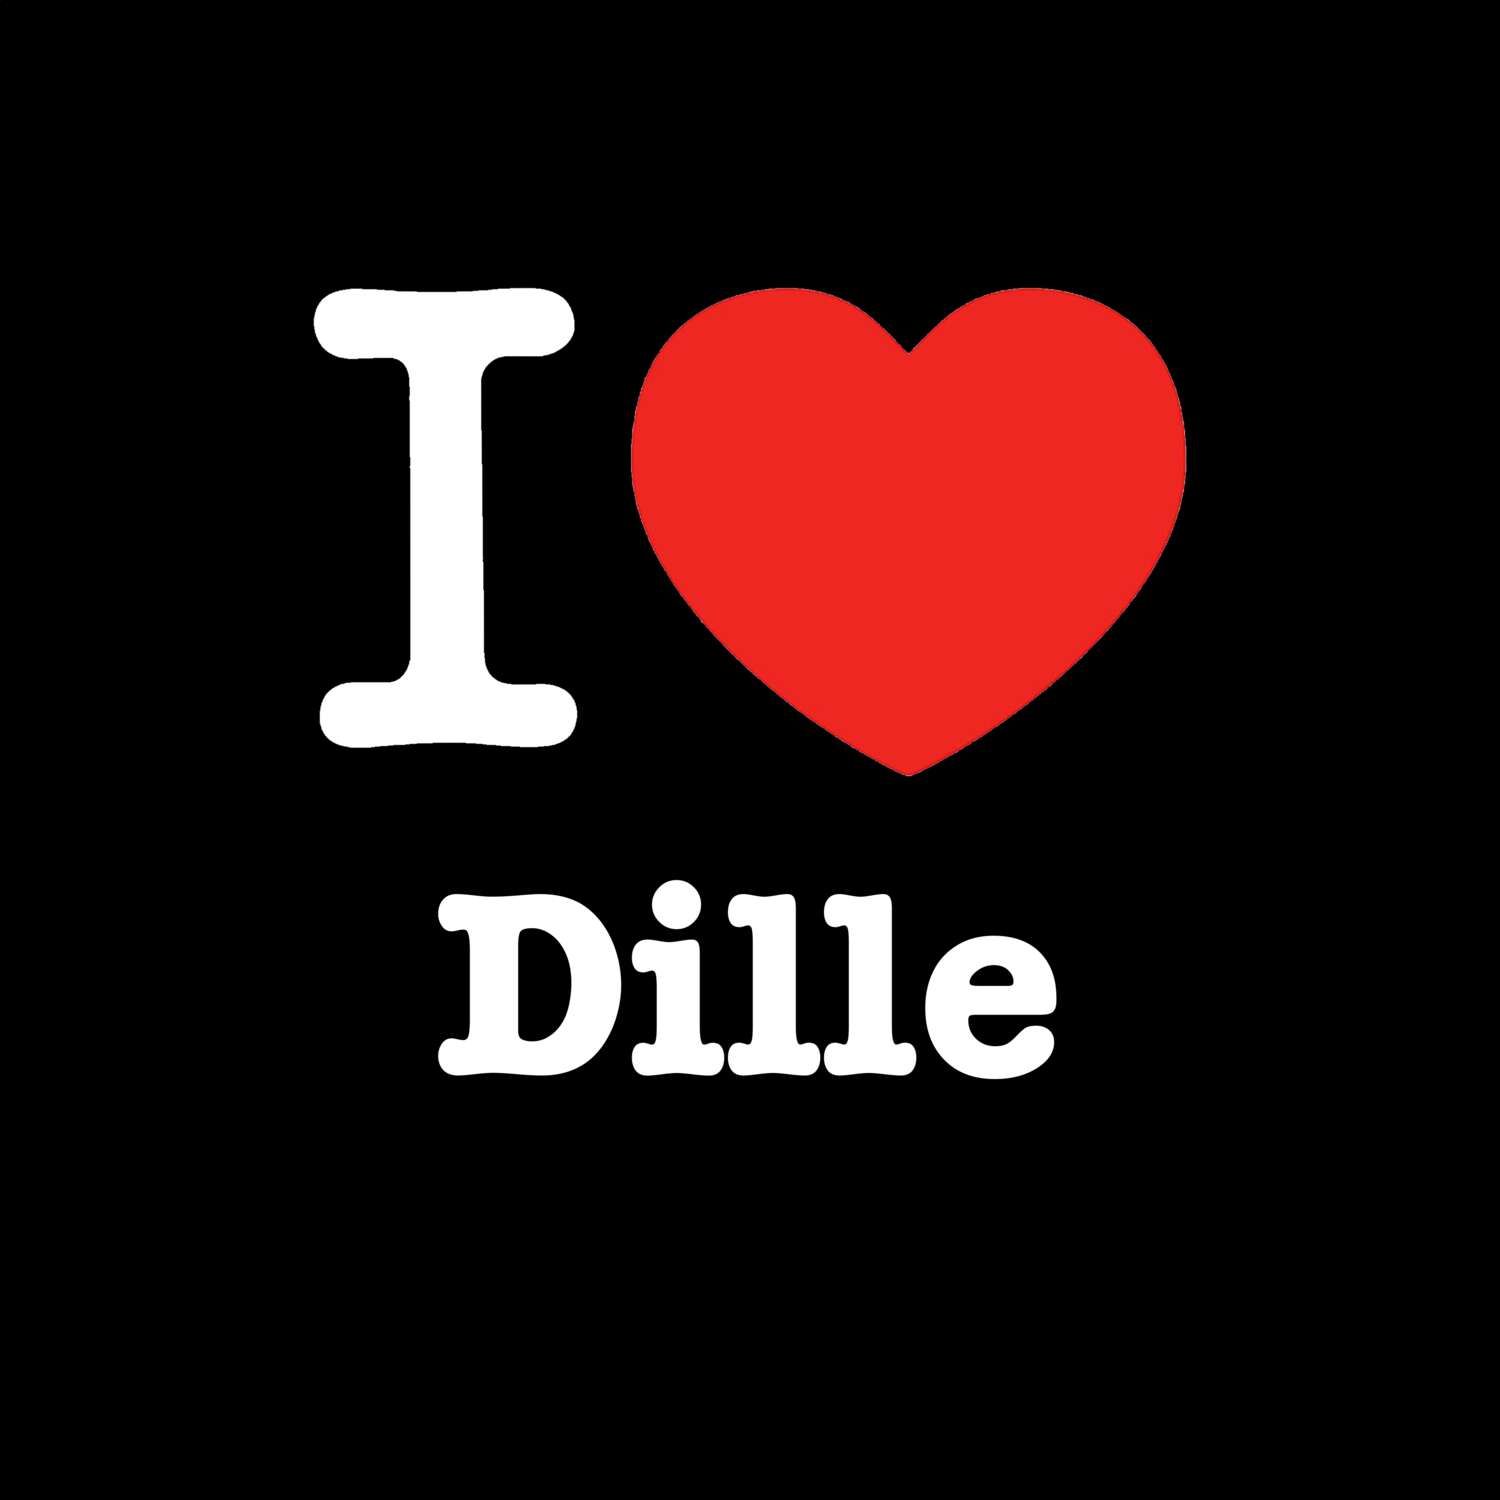 Dille T-Shirt »I love«